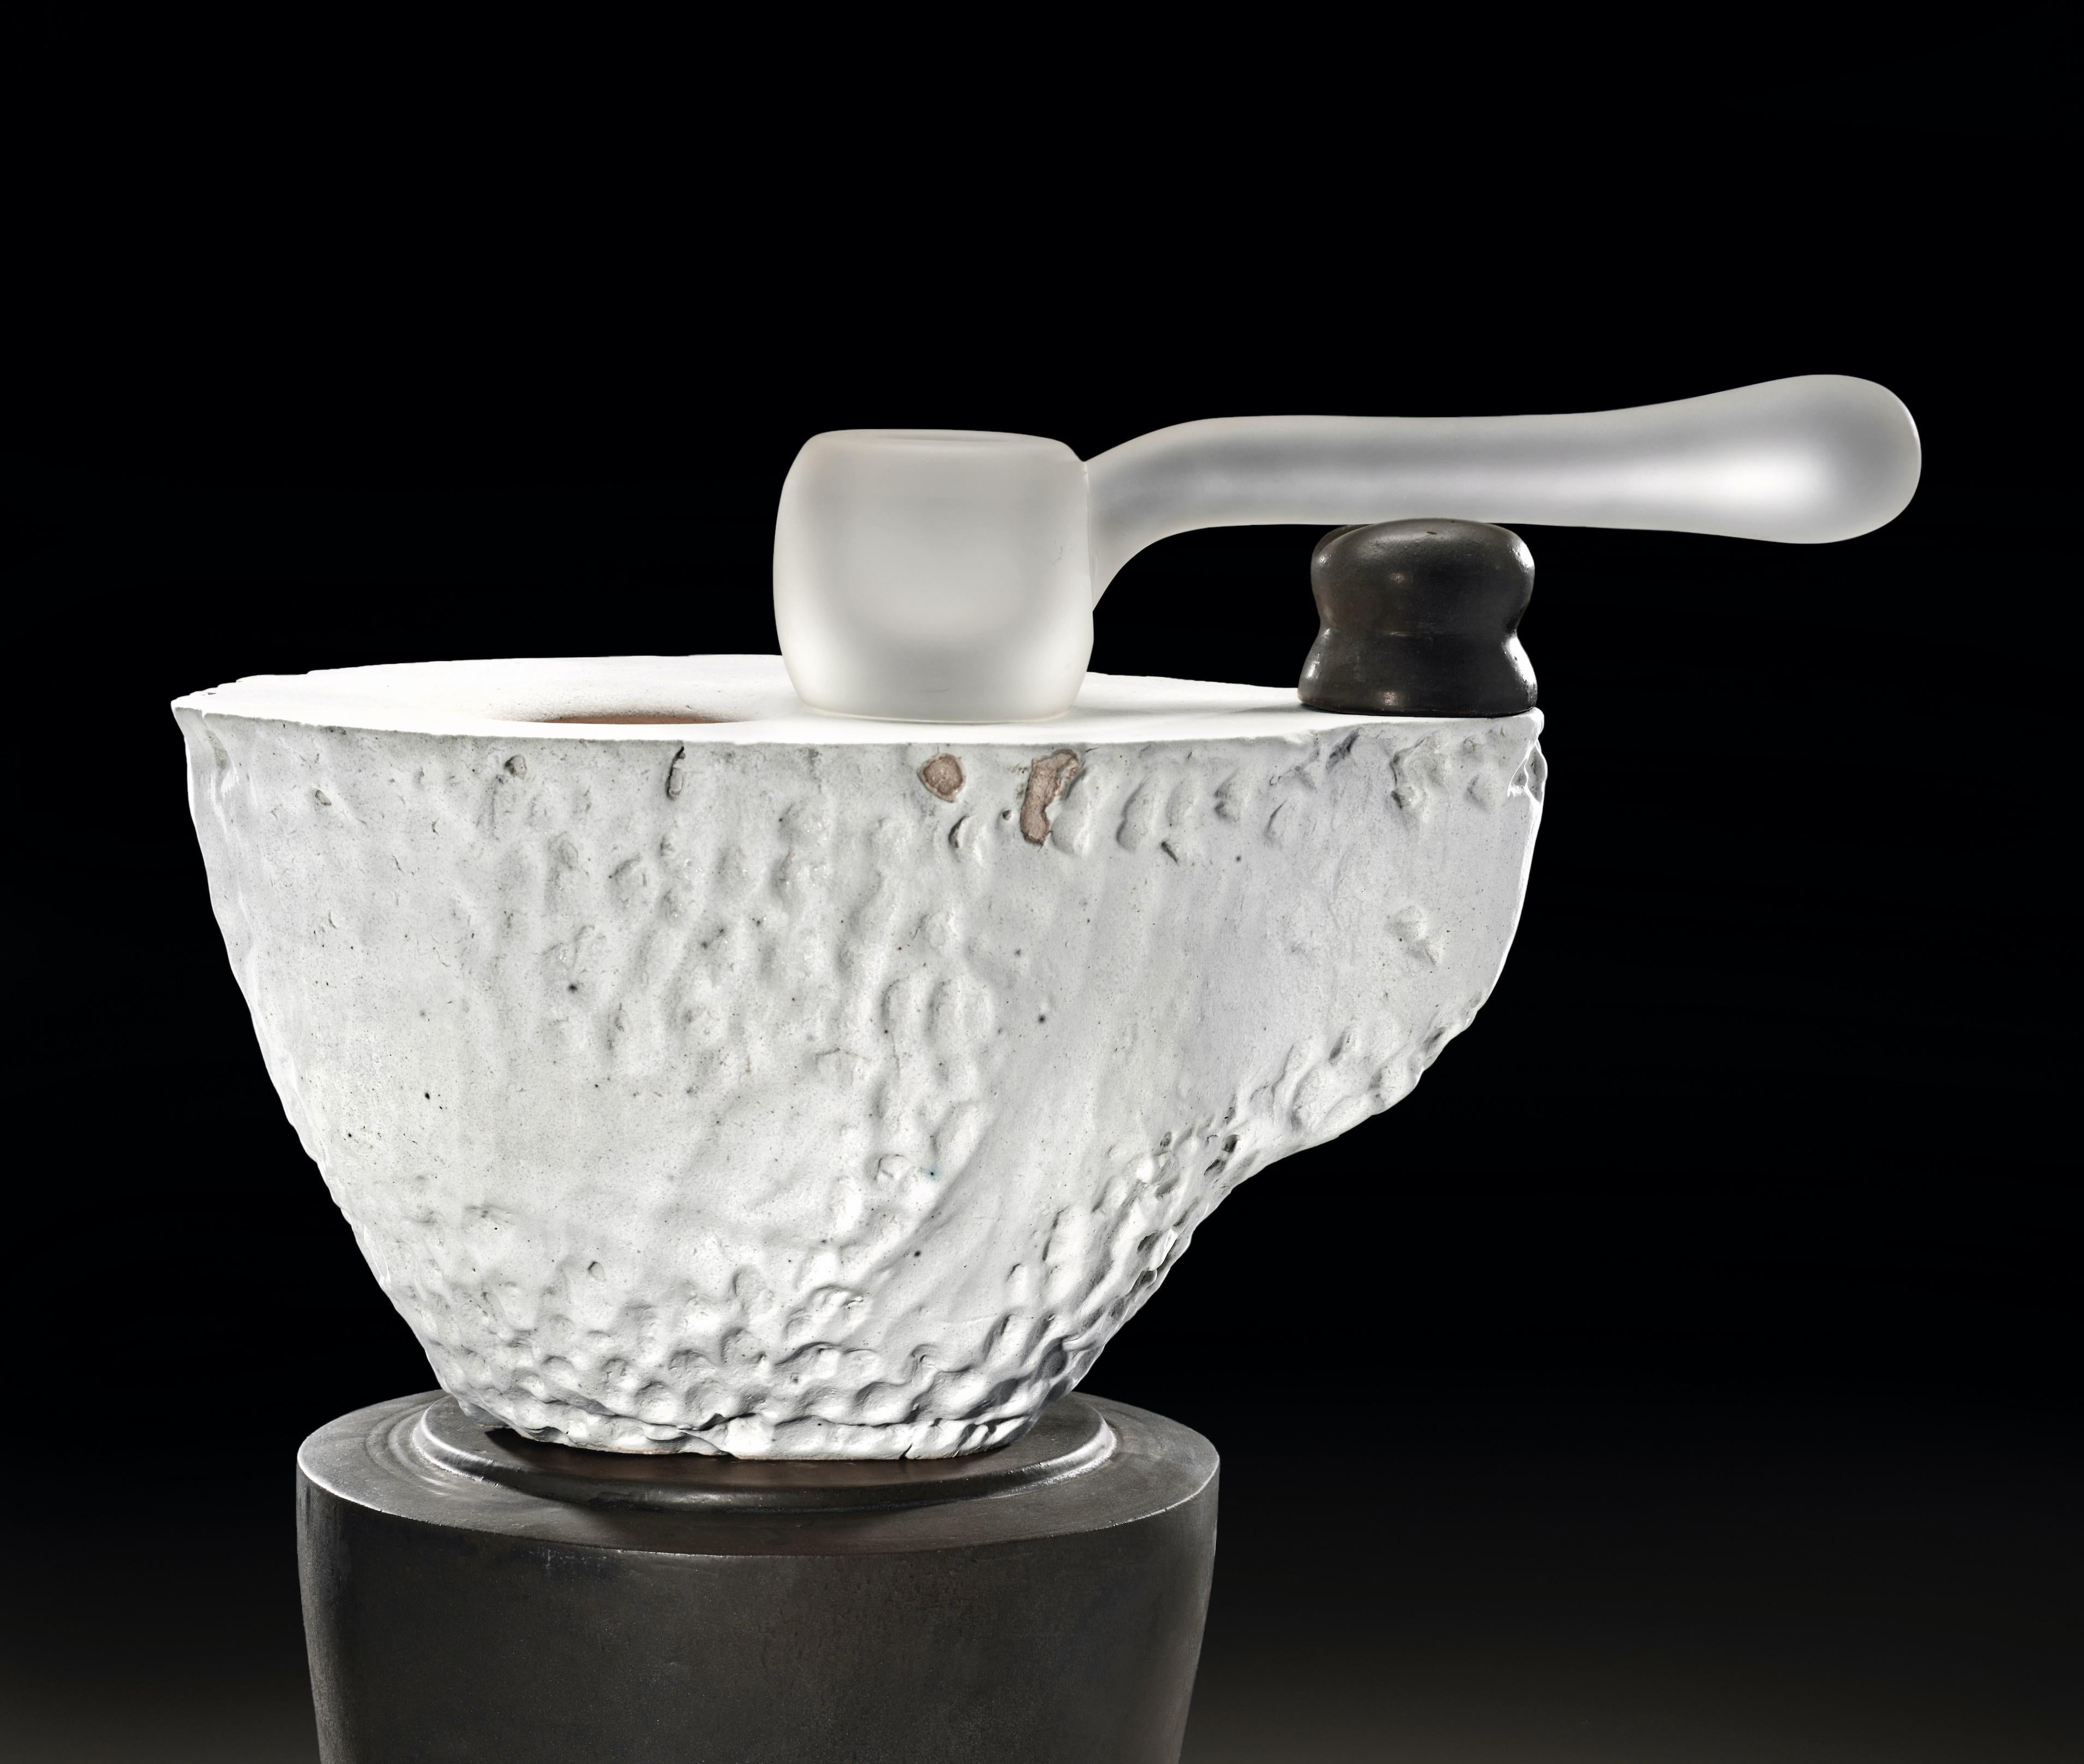 Glazed Richard Hirsch Ceramic Altar Bowl with Blown Glass Ladle Sculpture #3, 2020 For Sale